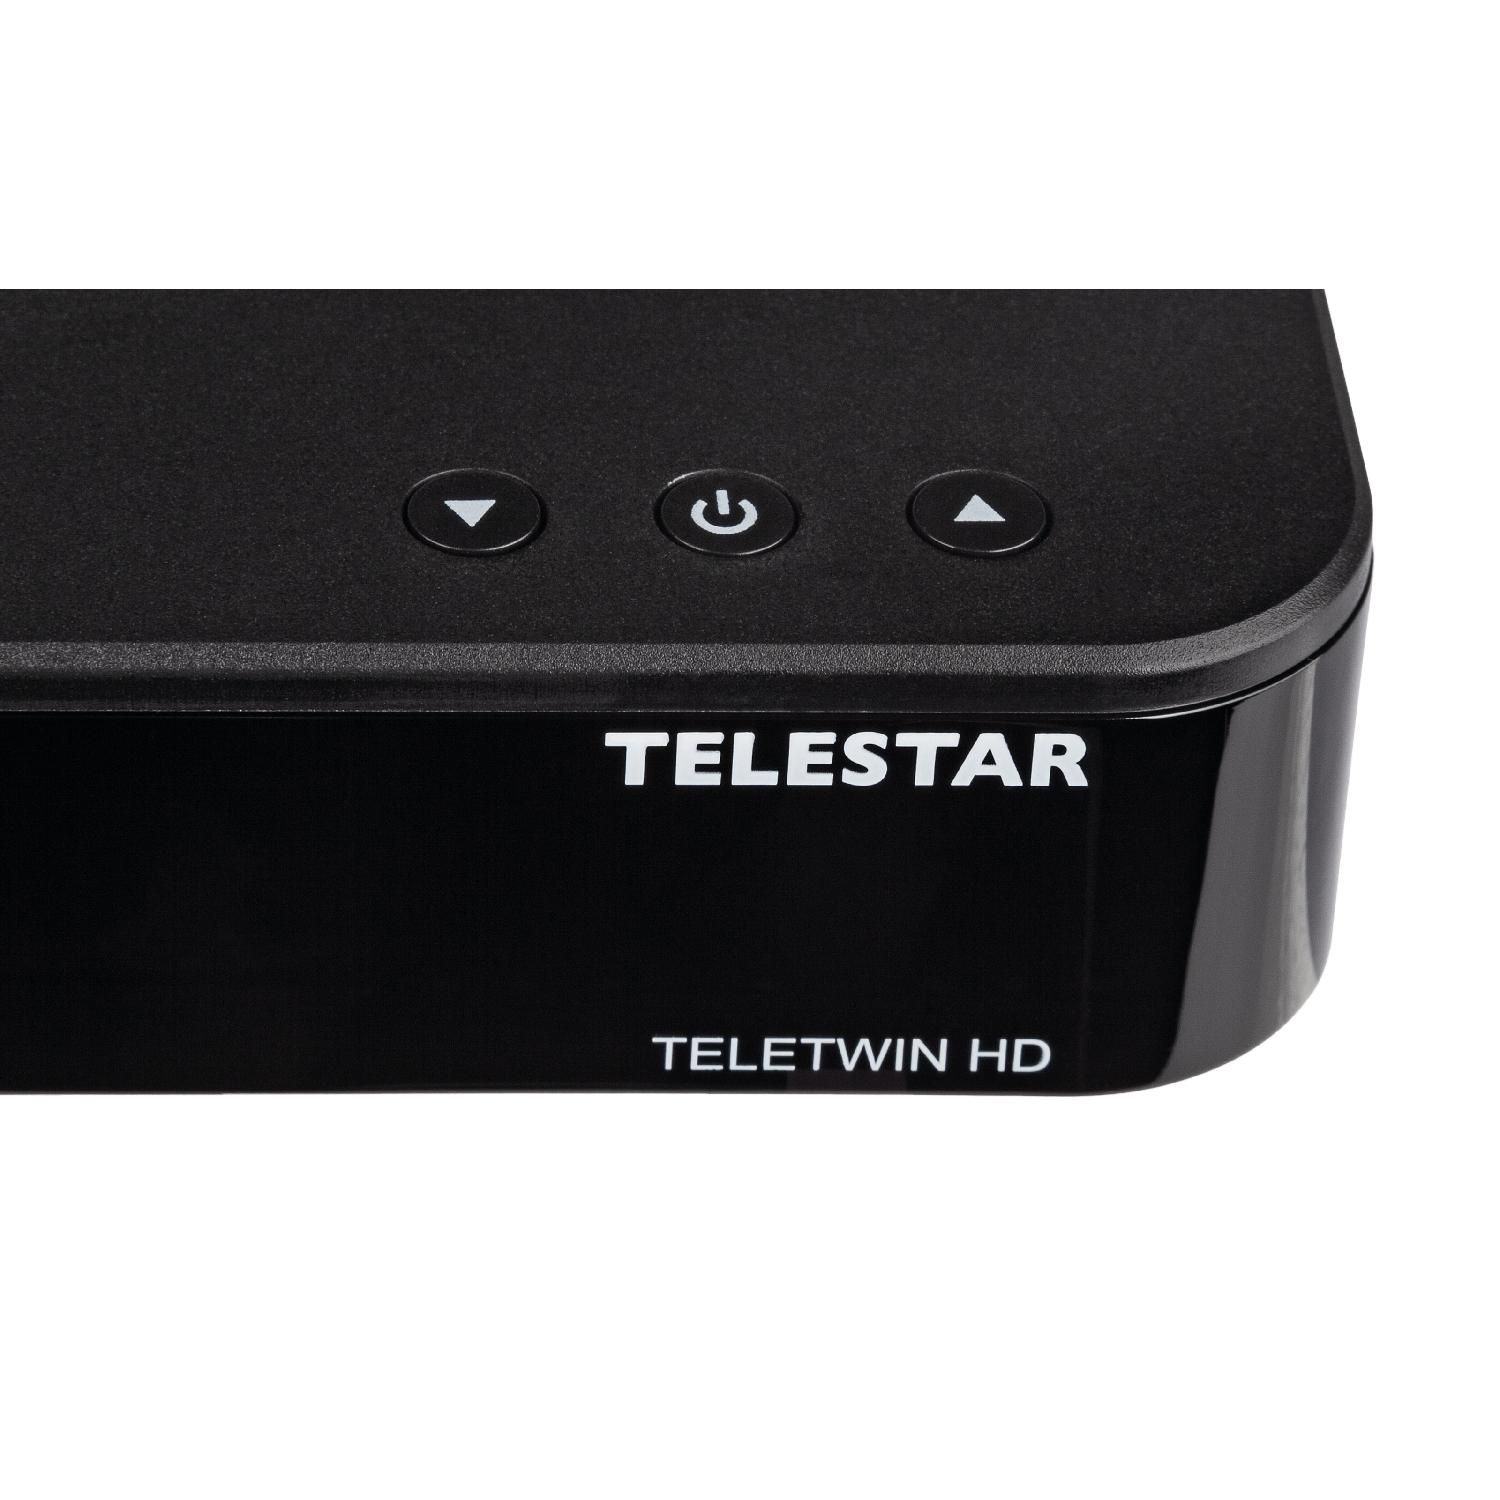 TELESTAR (schwarz) TELETWIN HD SAT-Receiver